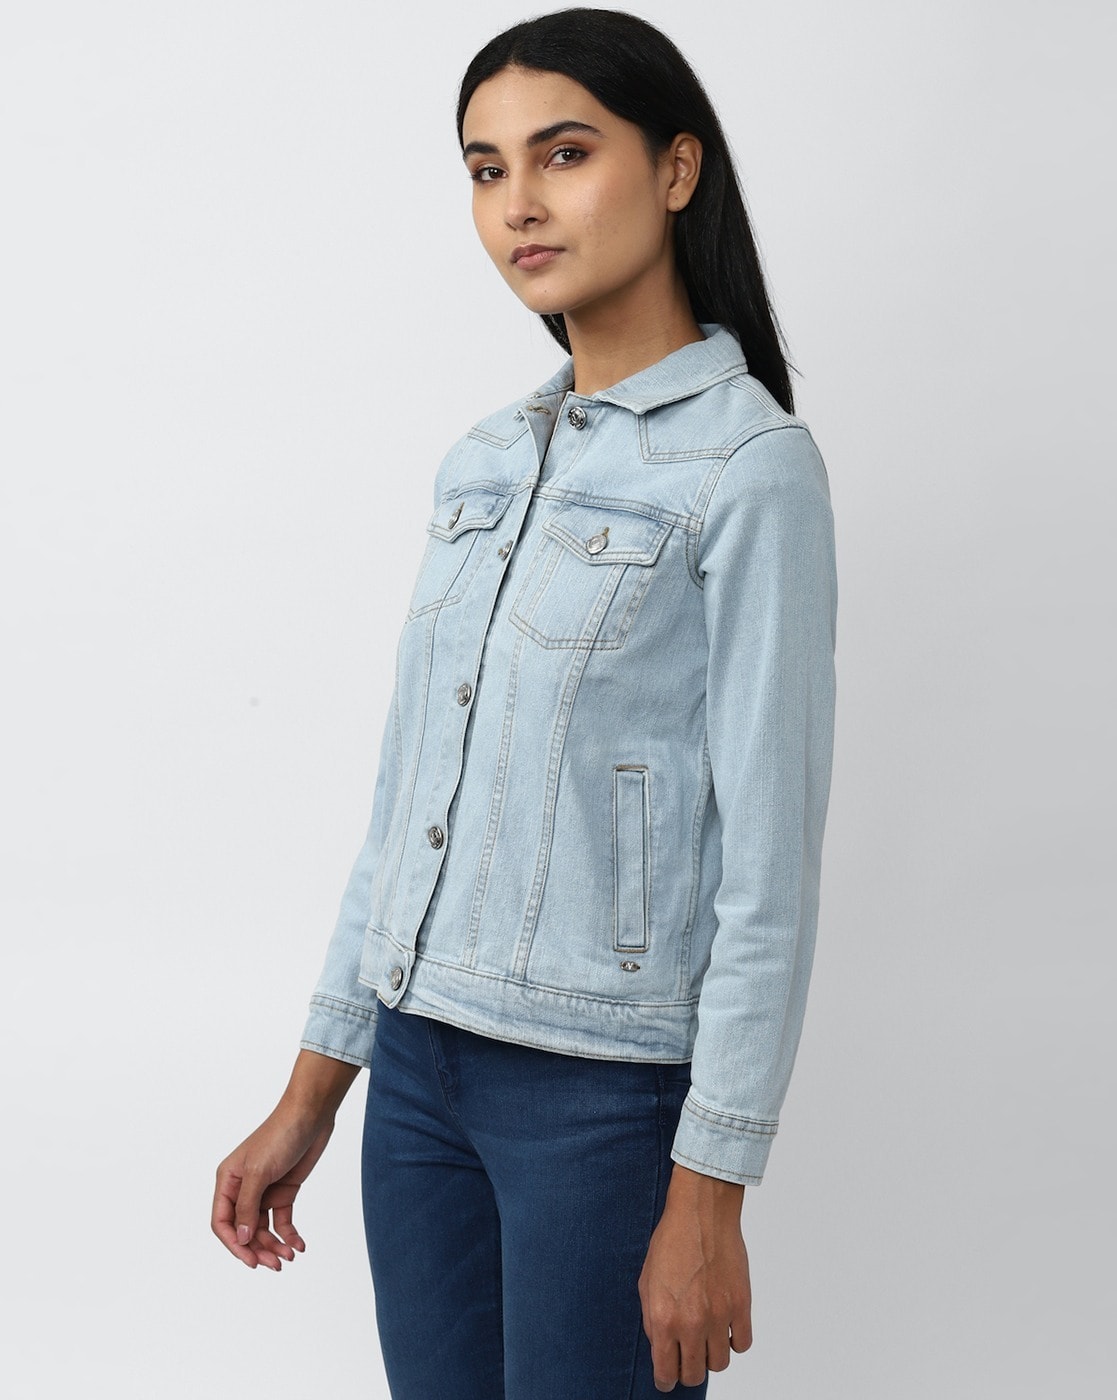 Buy SAAKAA Women's Denim Blue Jacket at Amazon.in